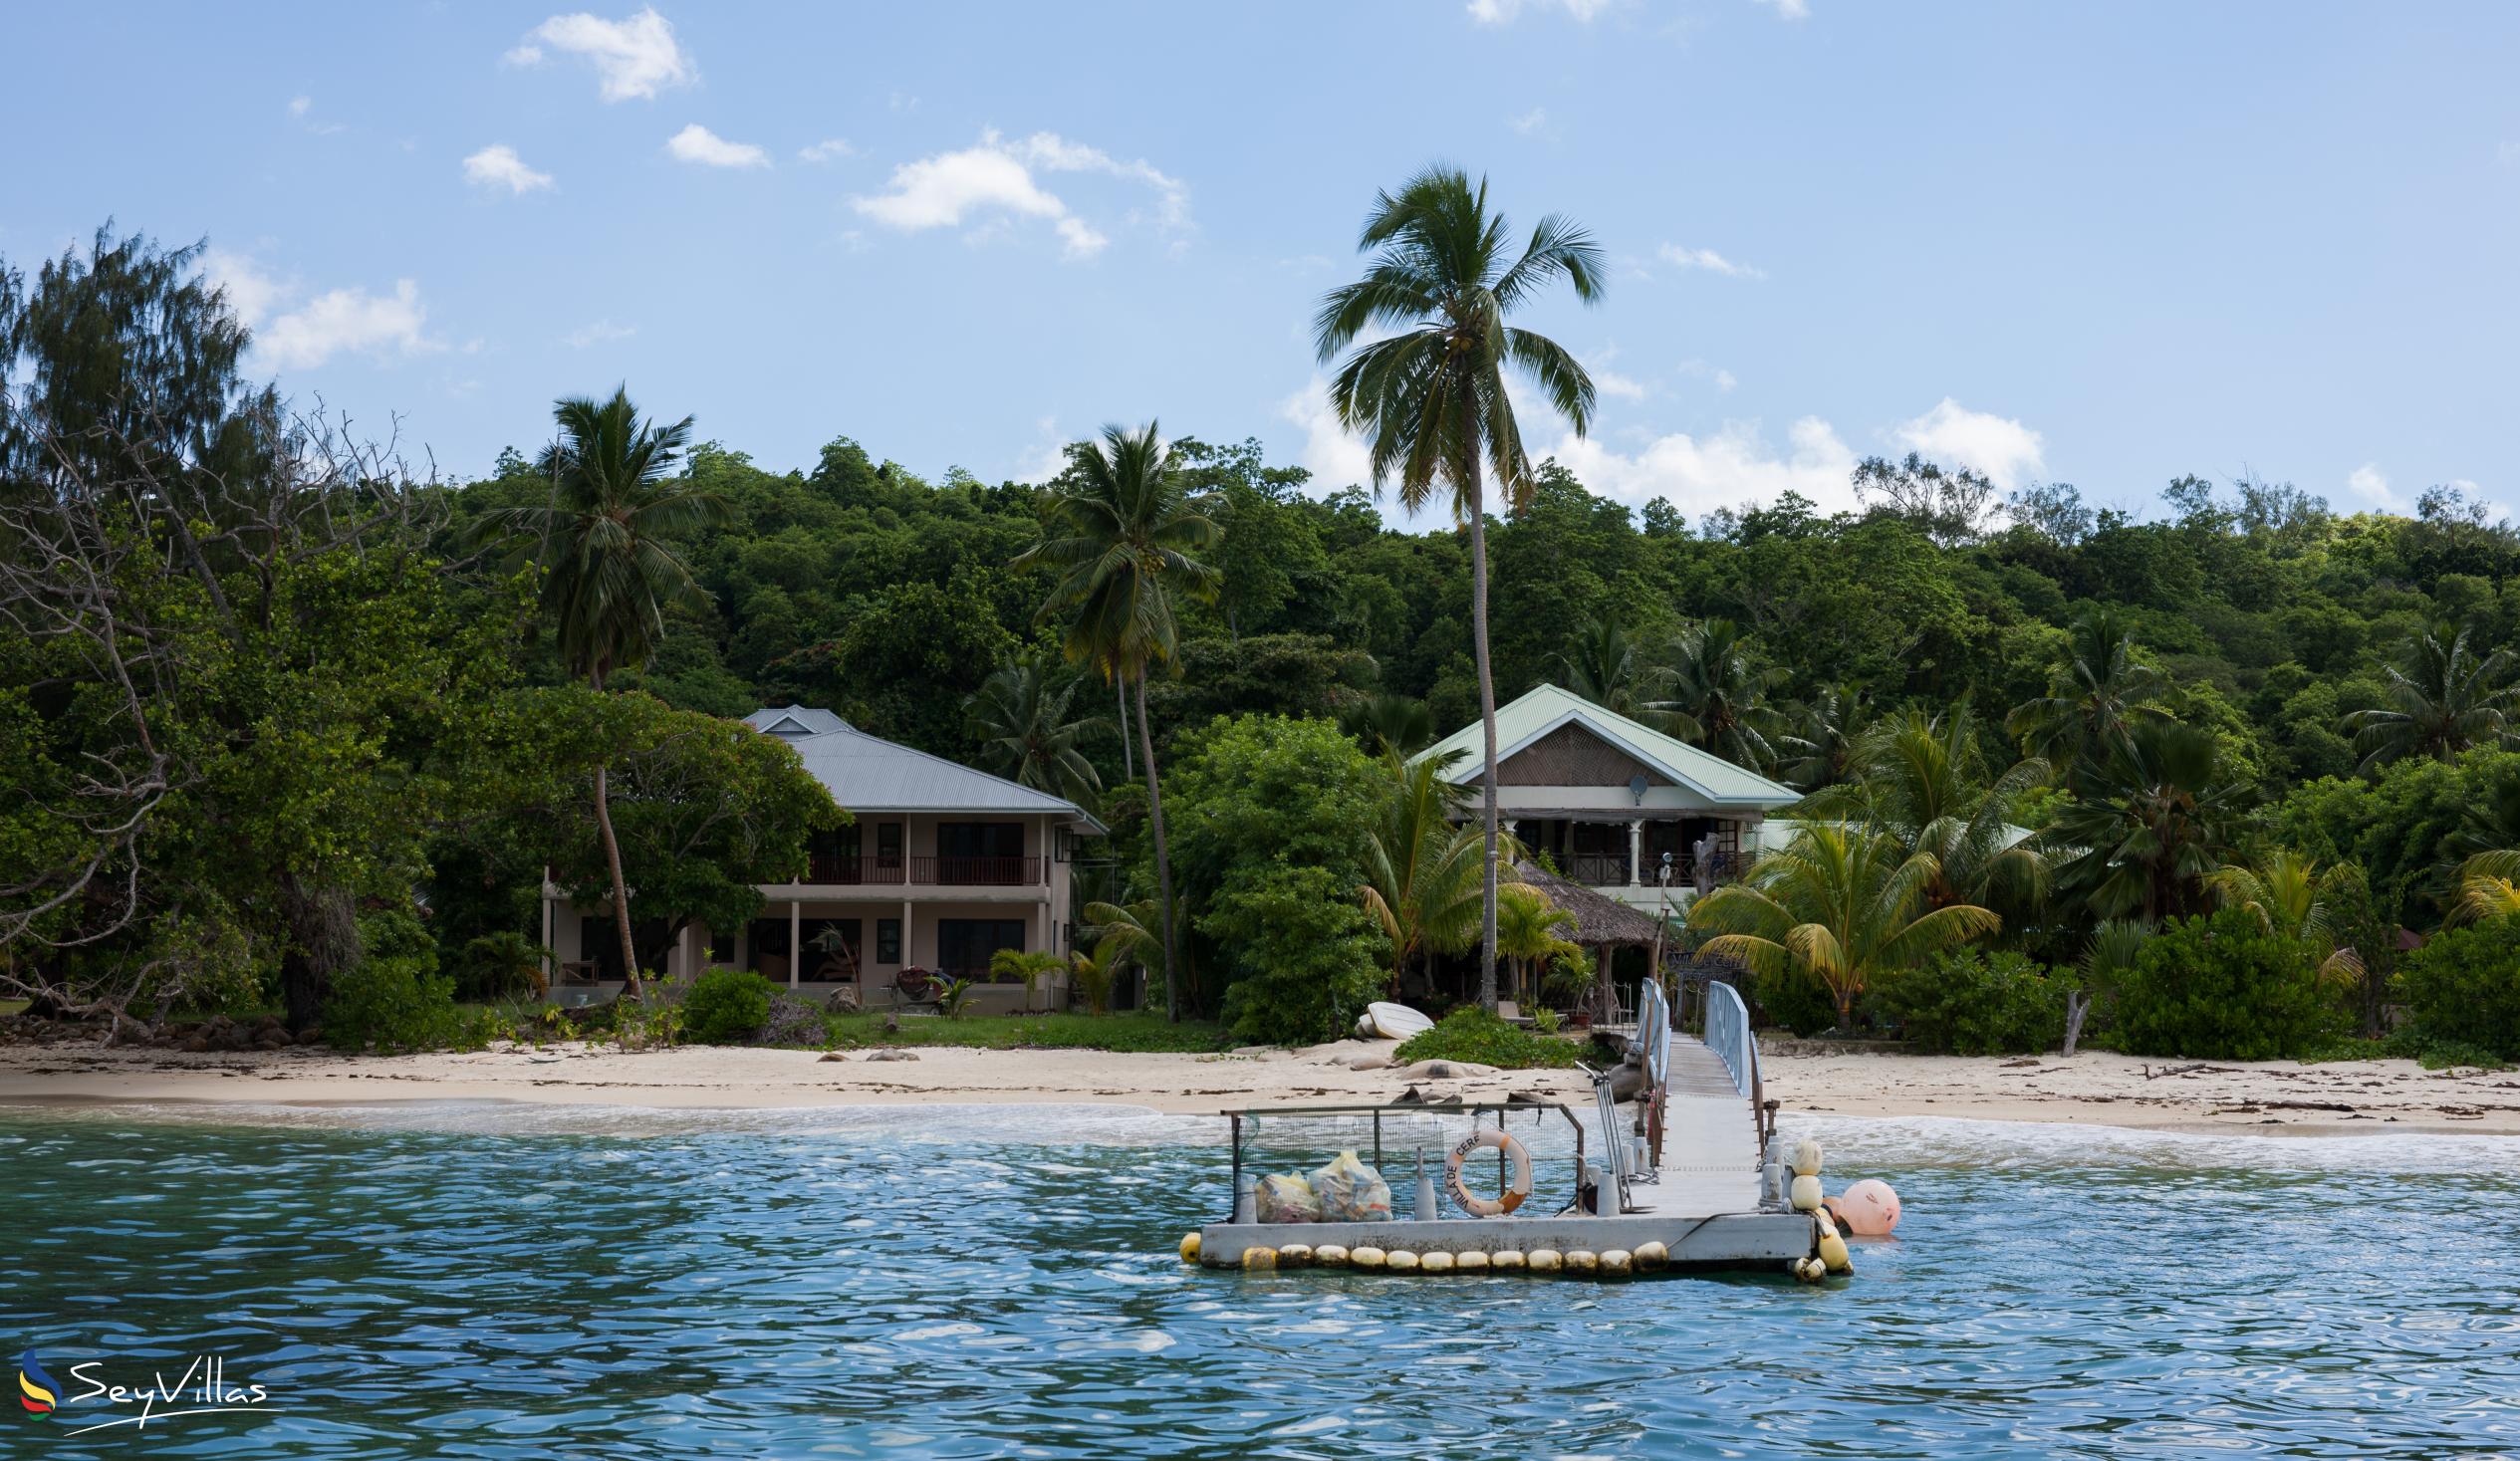 Photo 46: Villa de Cerf - Outdoor area - Cerf Island (Seychelles)